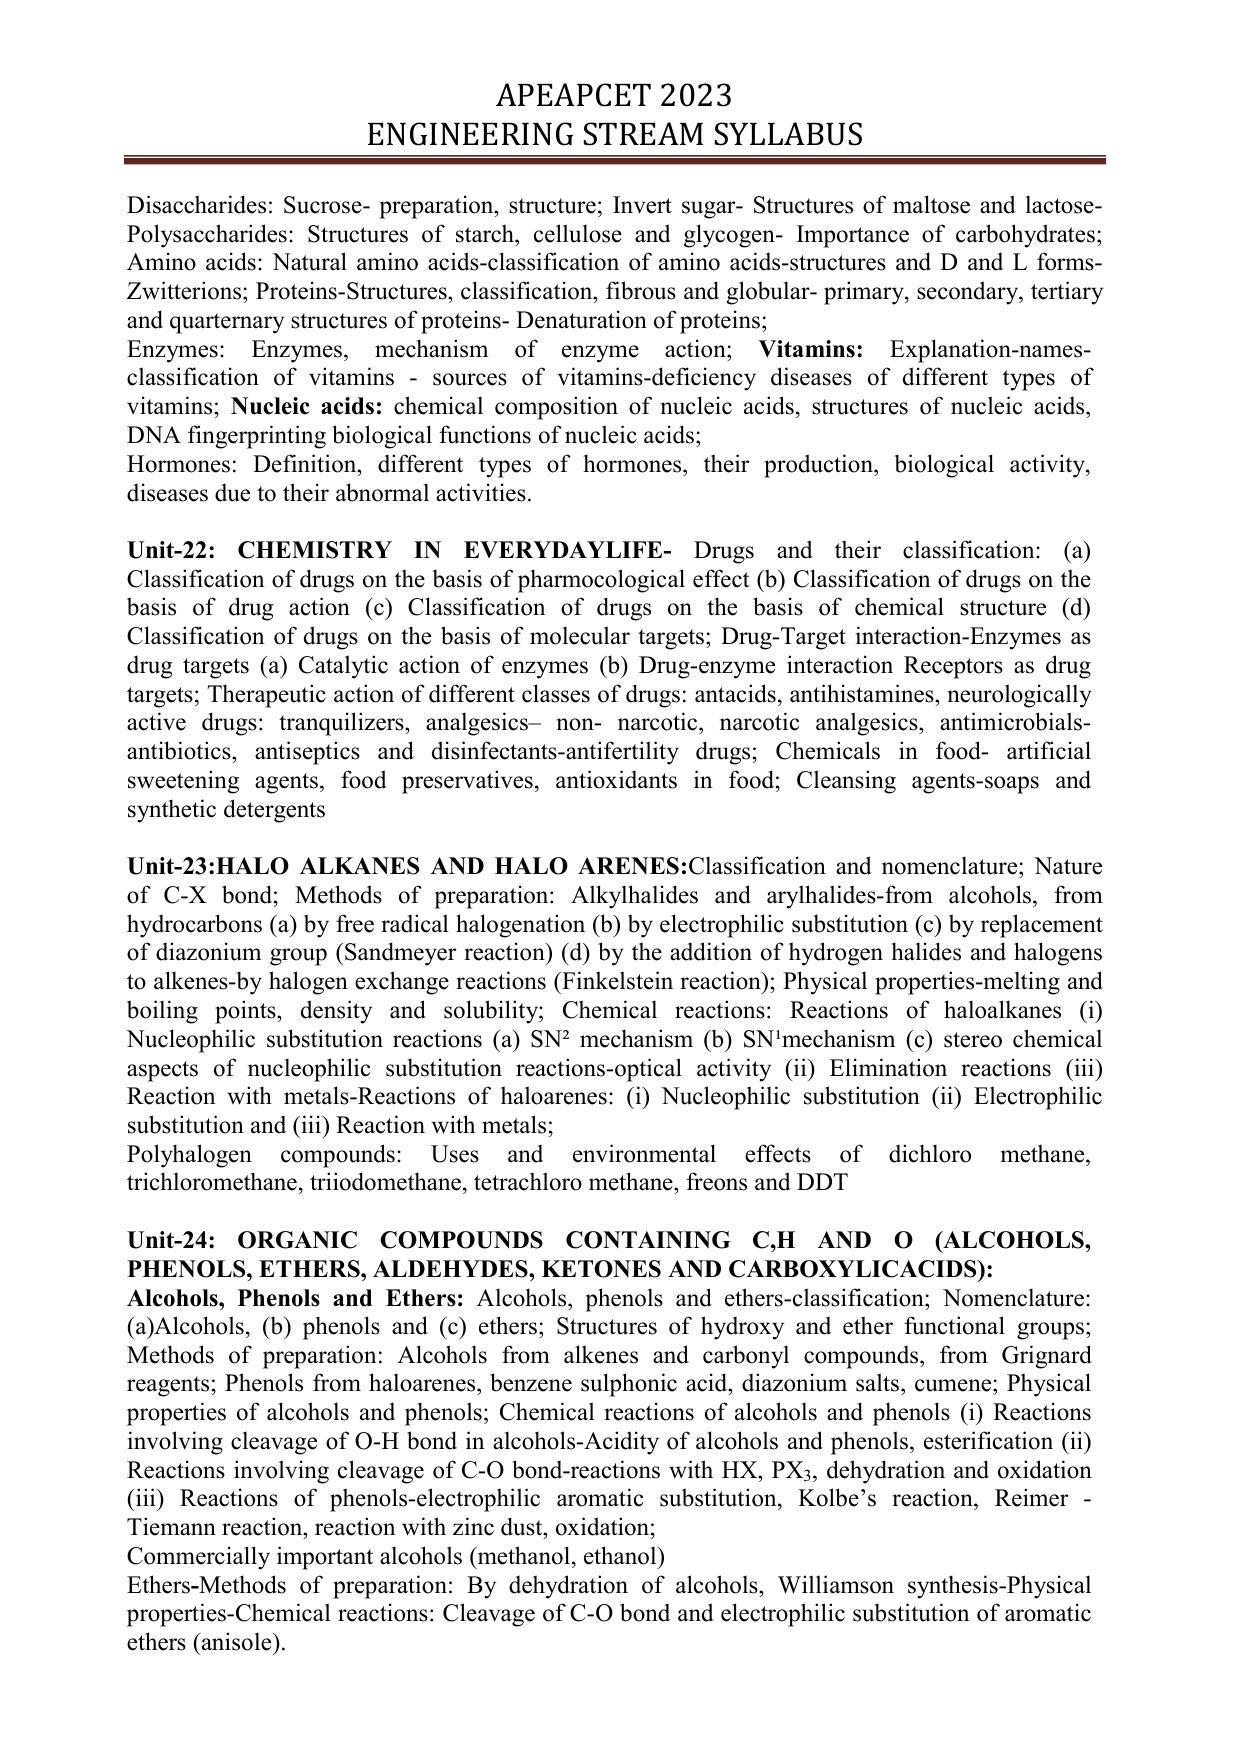 AP EAPCET Engineering Syllabus - Page 13